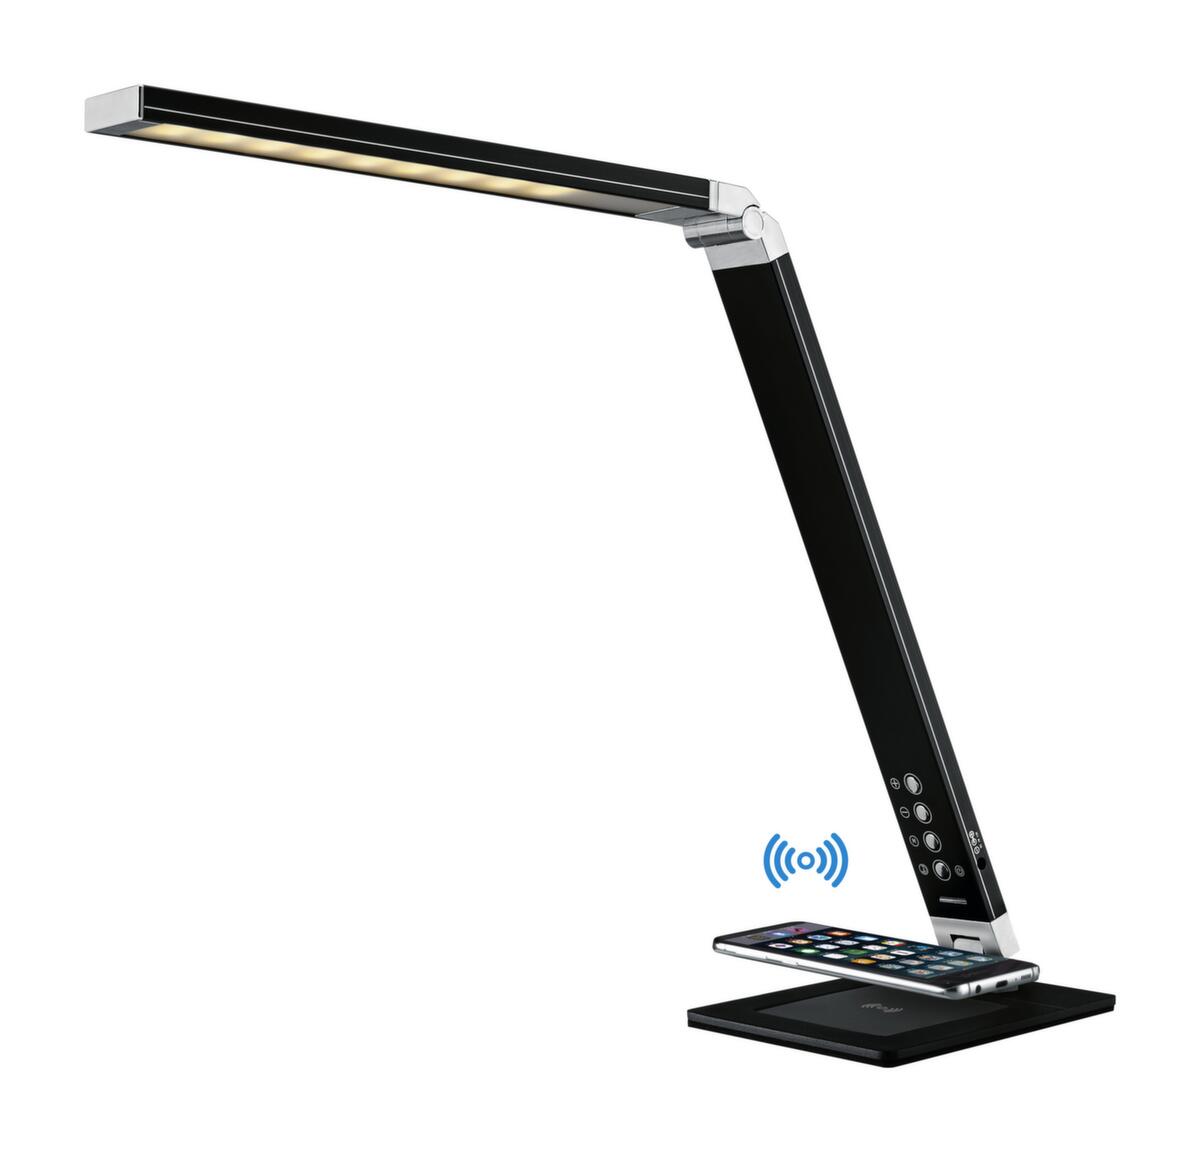 Hansa LED-tafellamp Magic Light met USB-aansluiting, licht daglicht- tot warmwit, zwart  ZOOM